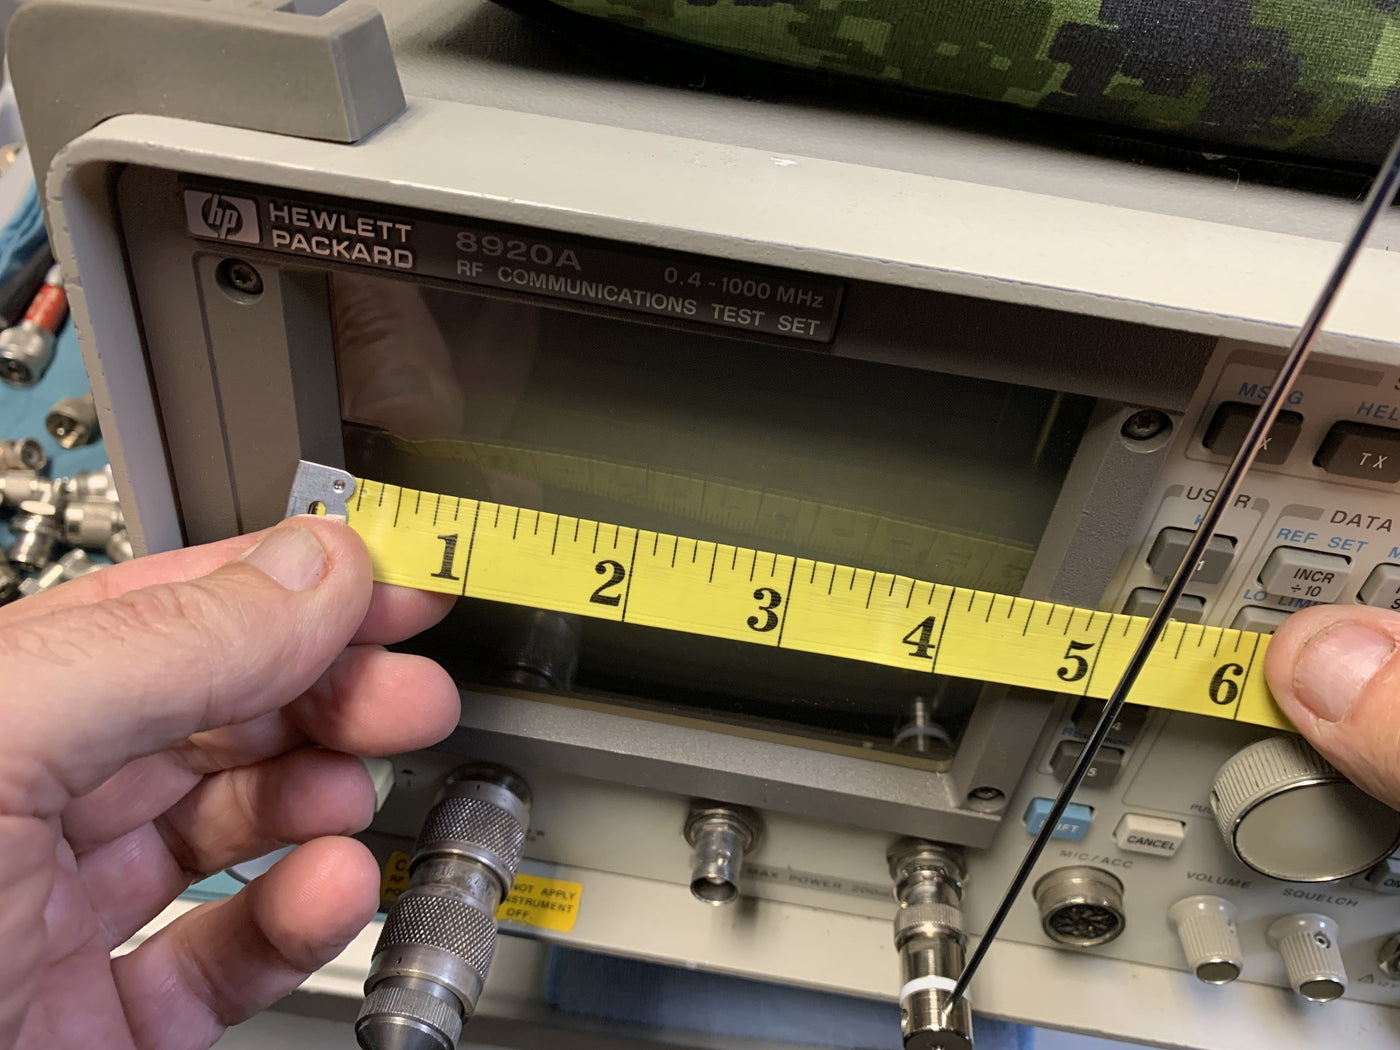 Fiberglass Measuring Tape + Case - CountyComm